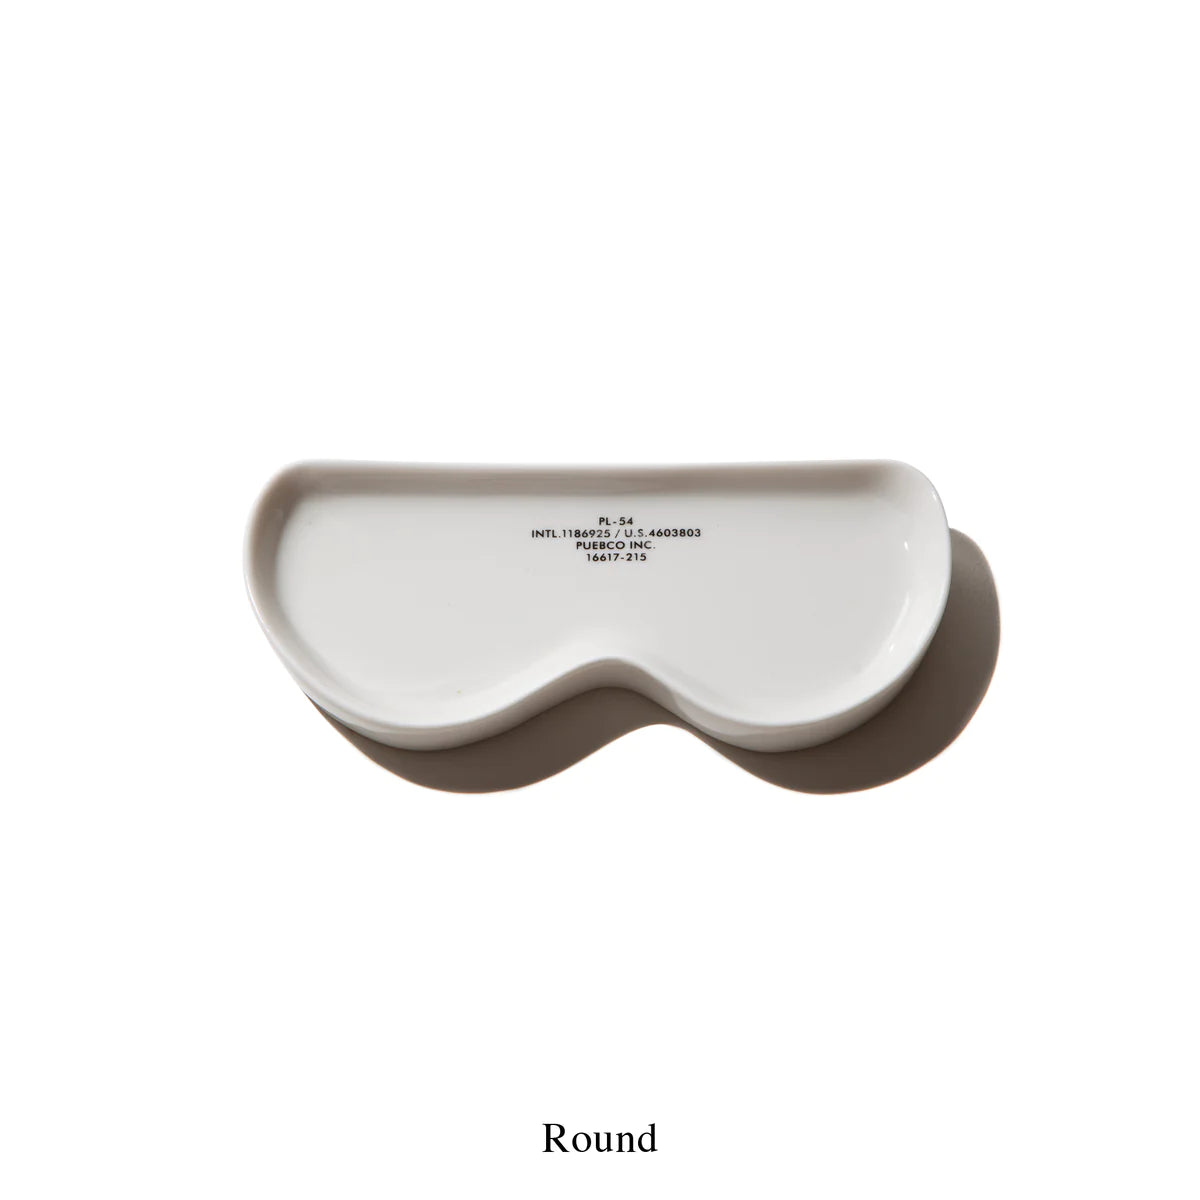 Glasses Tray - Round